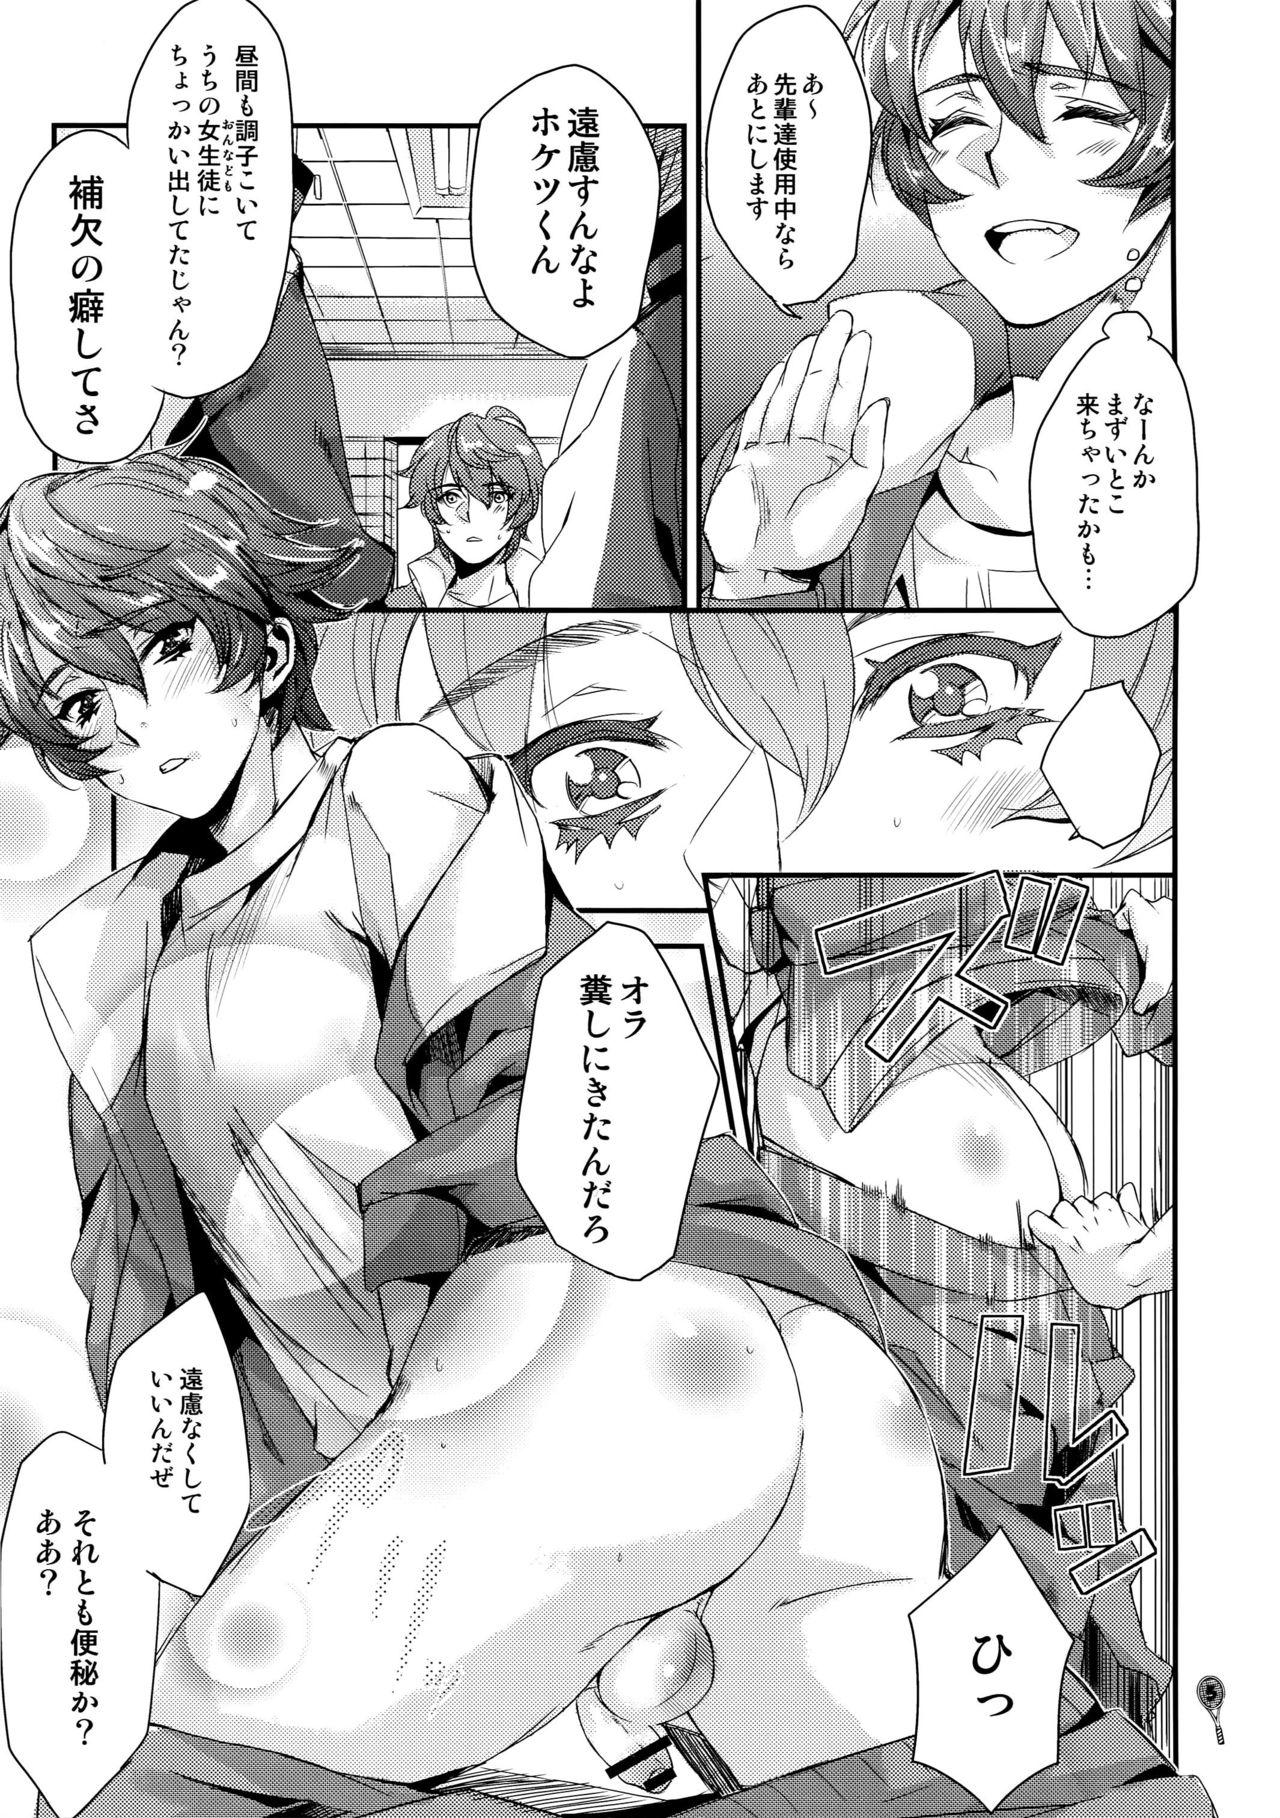 Amatuer Hoketsu no Kuse ni Namaiki da - Prince of tennis Submission - Page 4